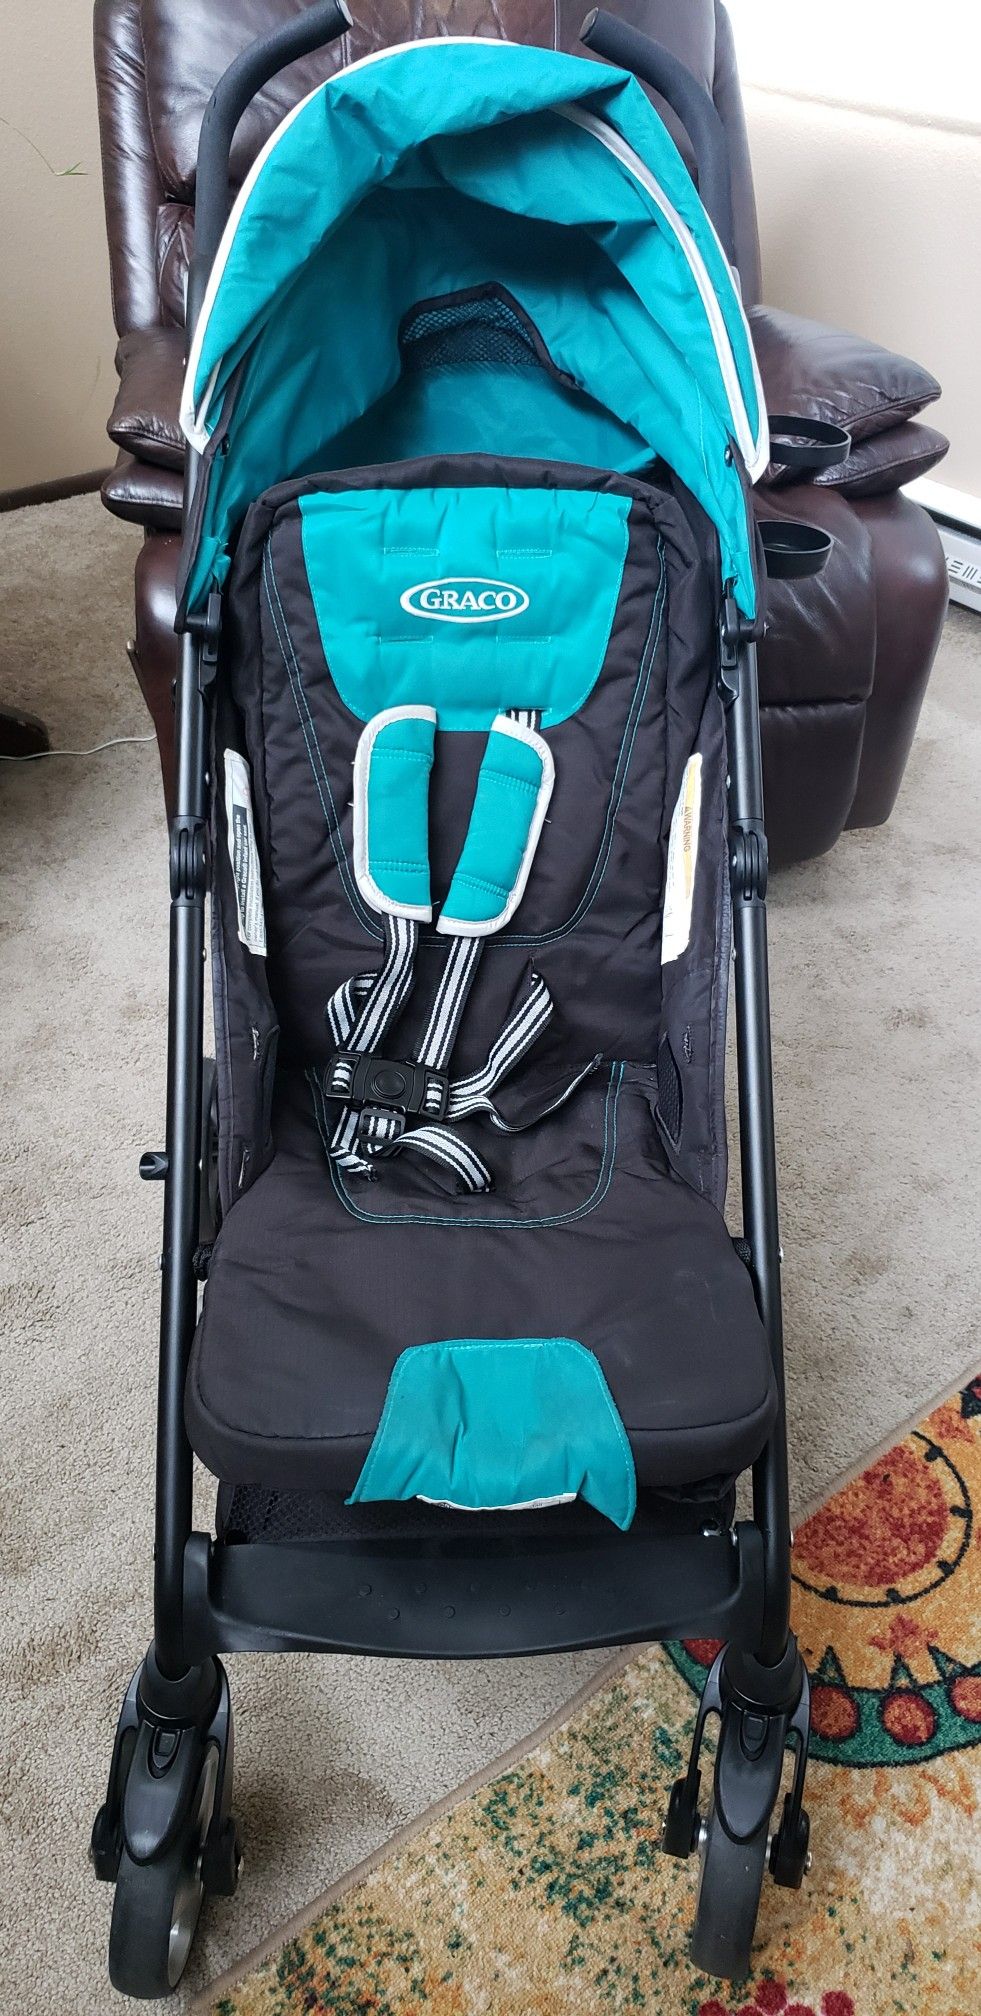 BabyTrend stroller